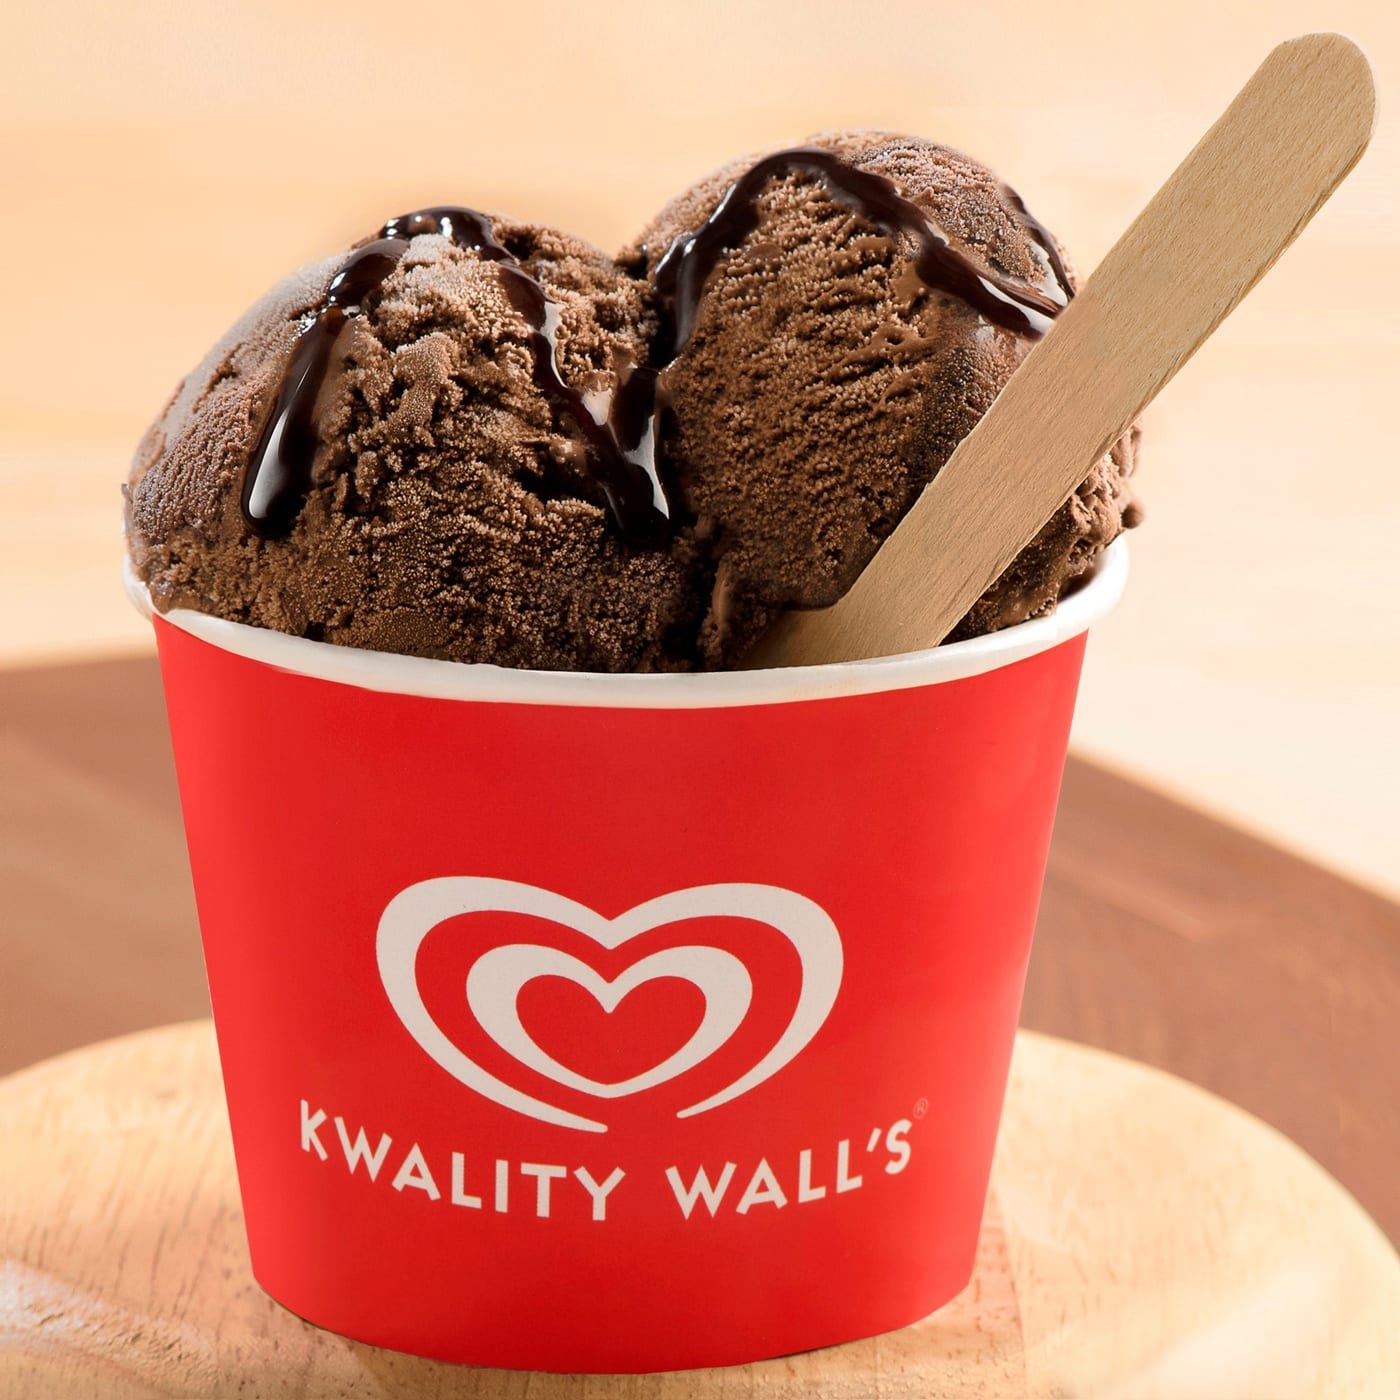 Wall's мороженое. Walls Ice Cream. Шоколадное мороженое реклама. Мороженое ги.